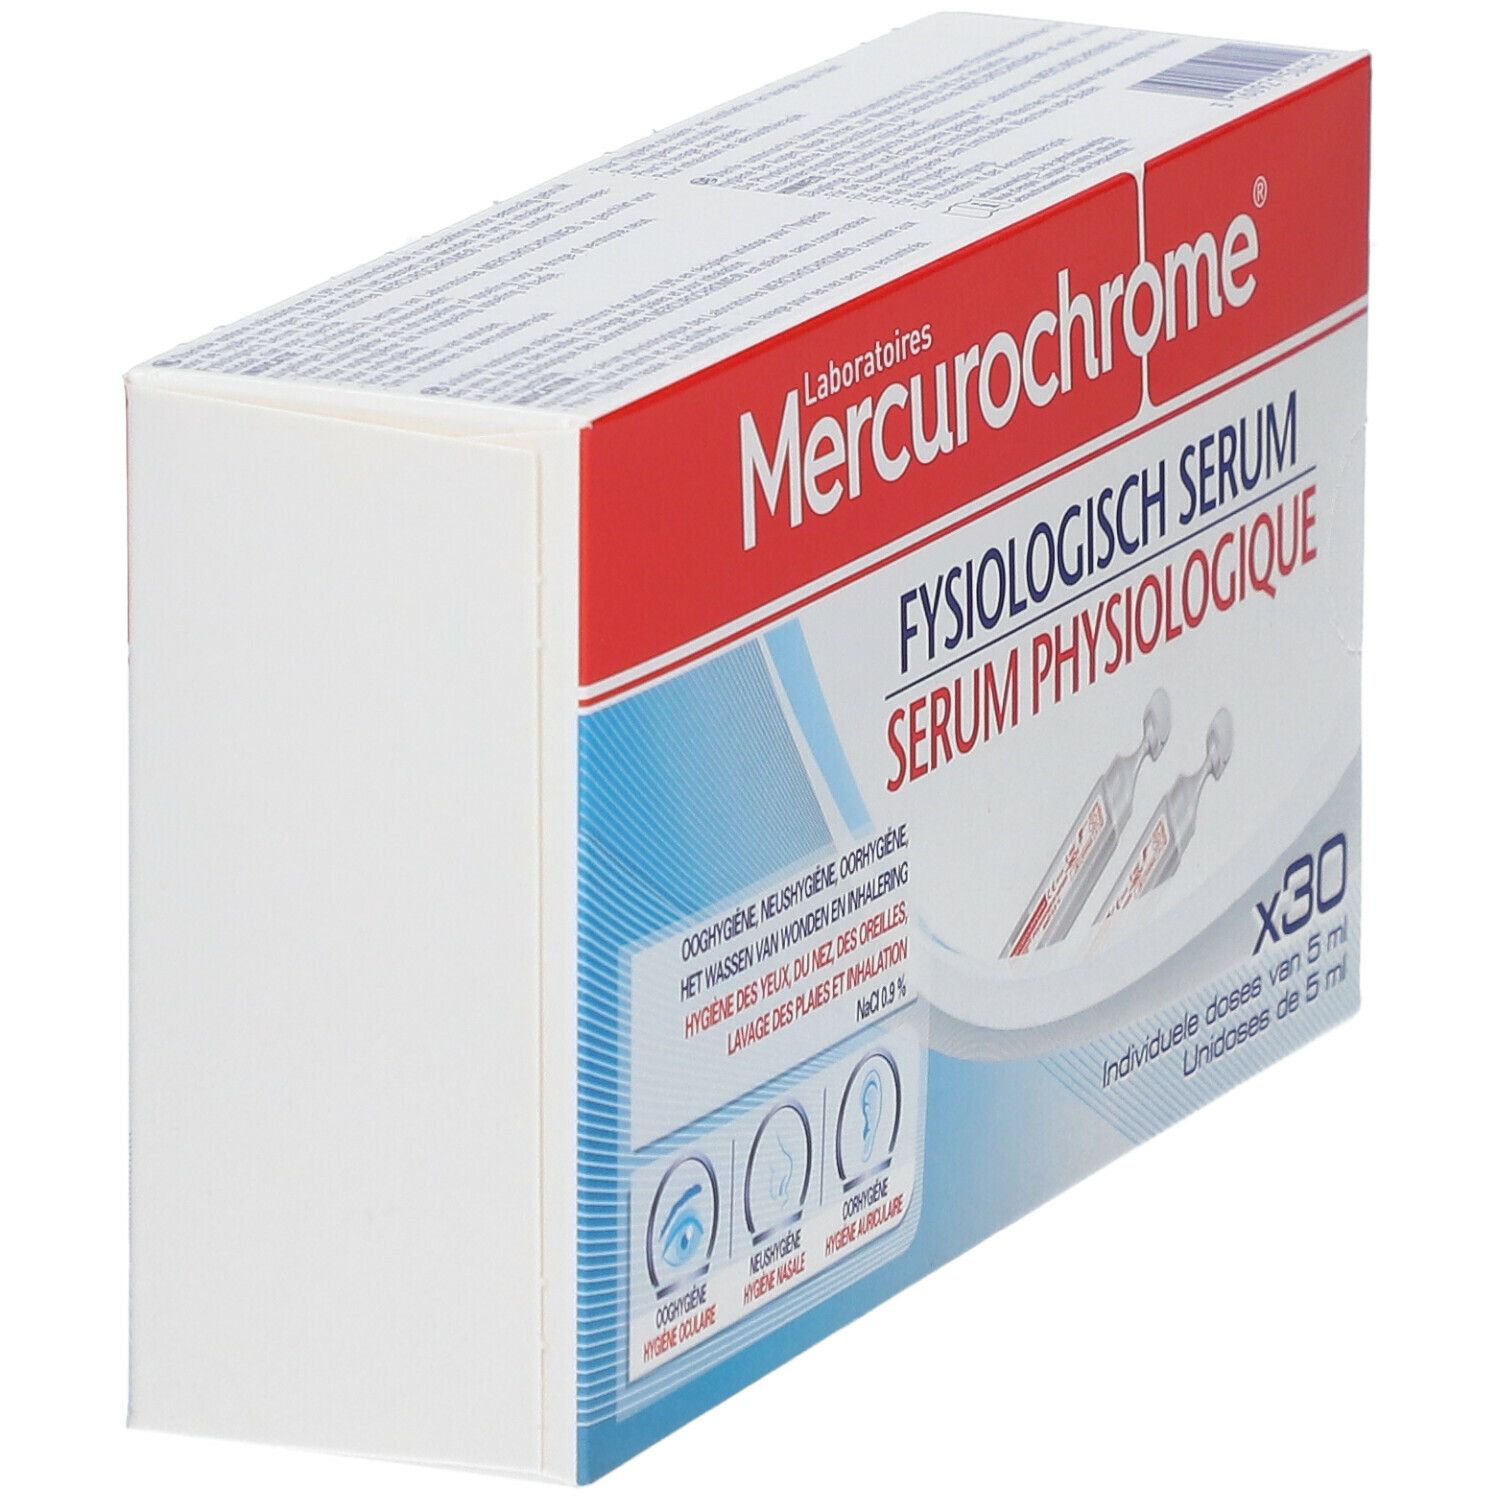 Mercurochrome Solution Saline Isotonique